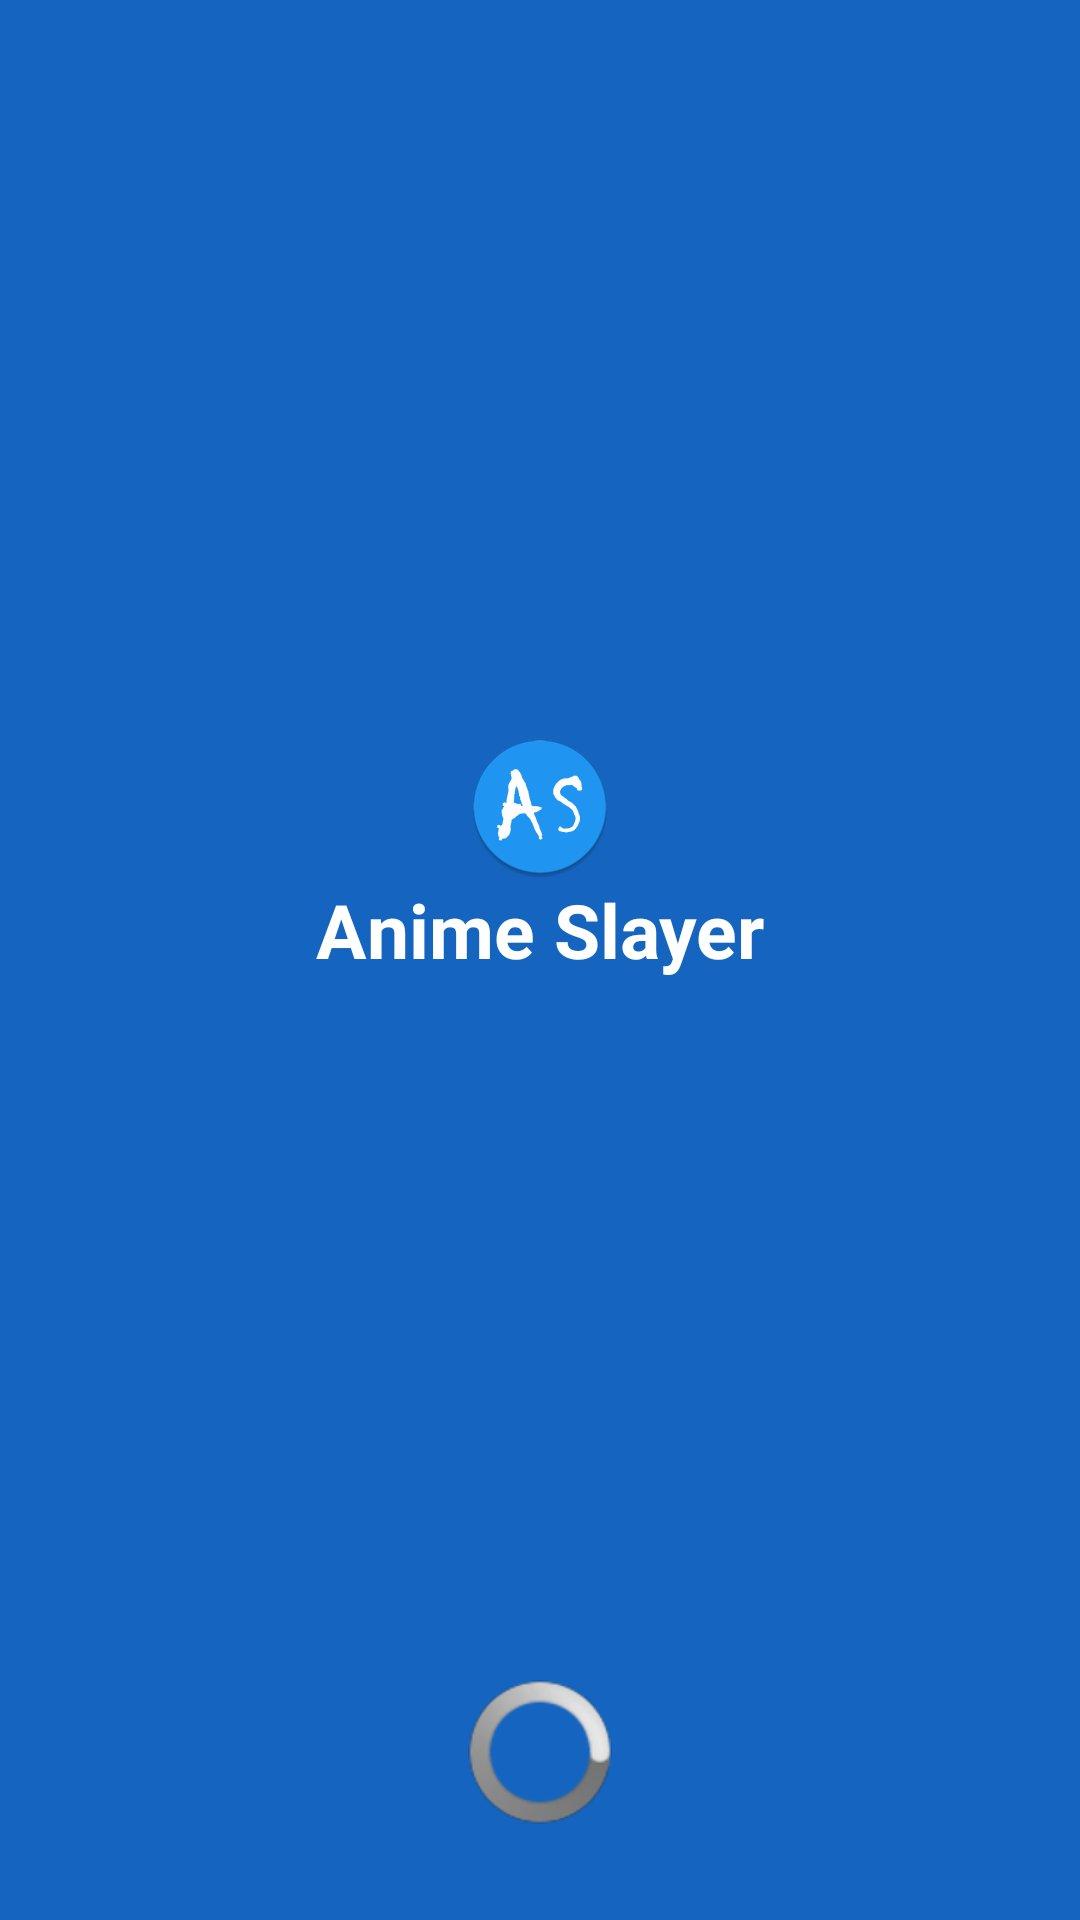 100+] Demon Slayer Anime Wallpapers | Wallpapers.com-demhanvico.com.vn